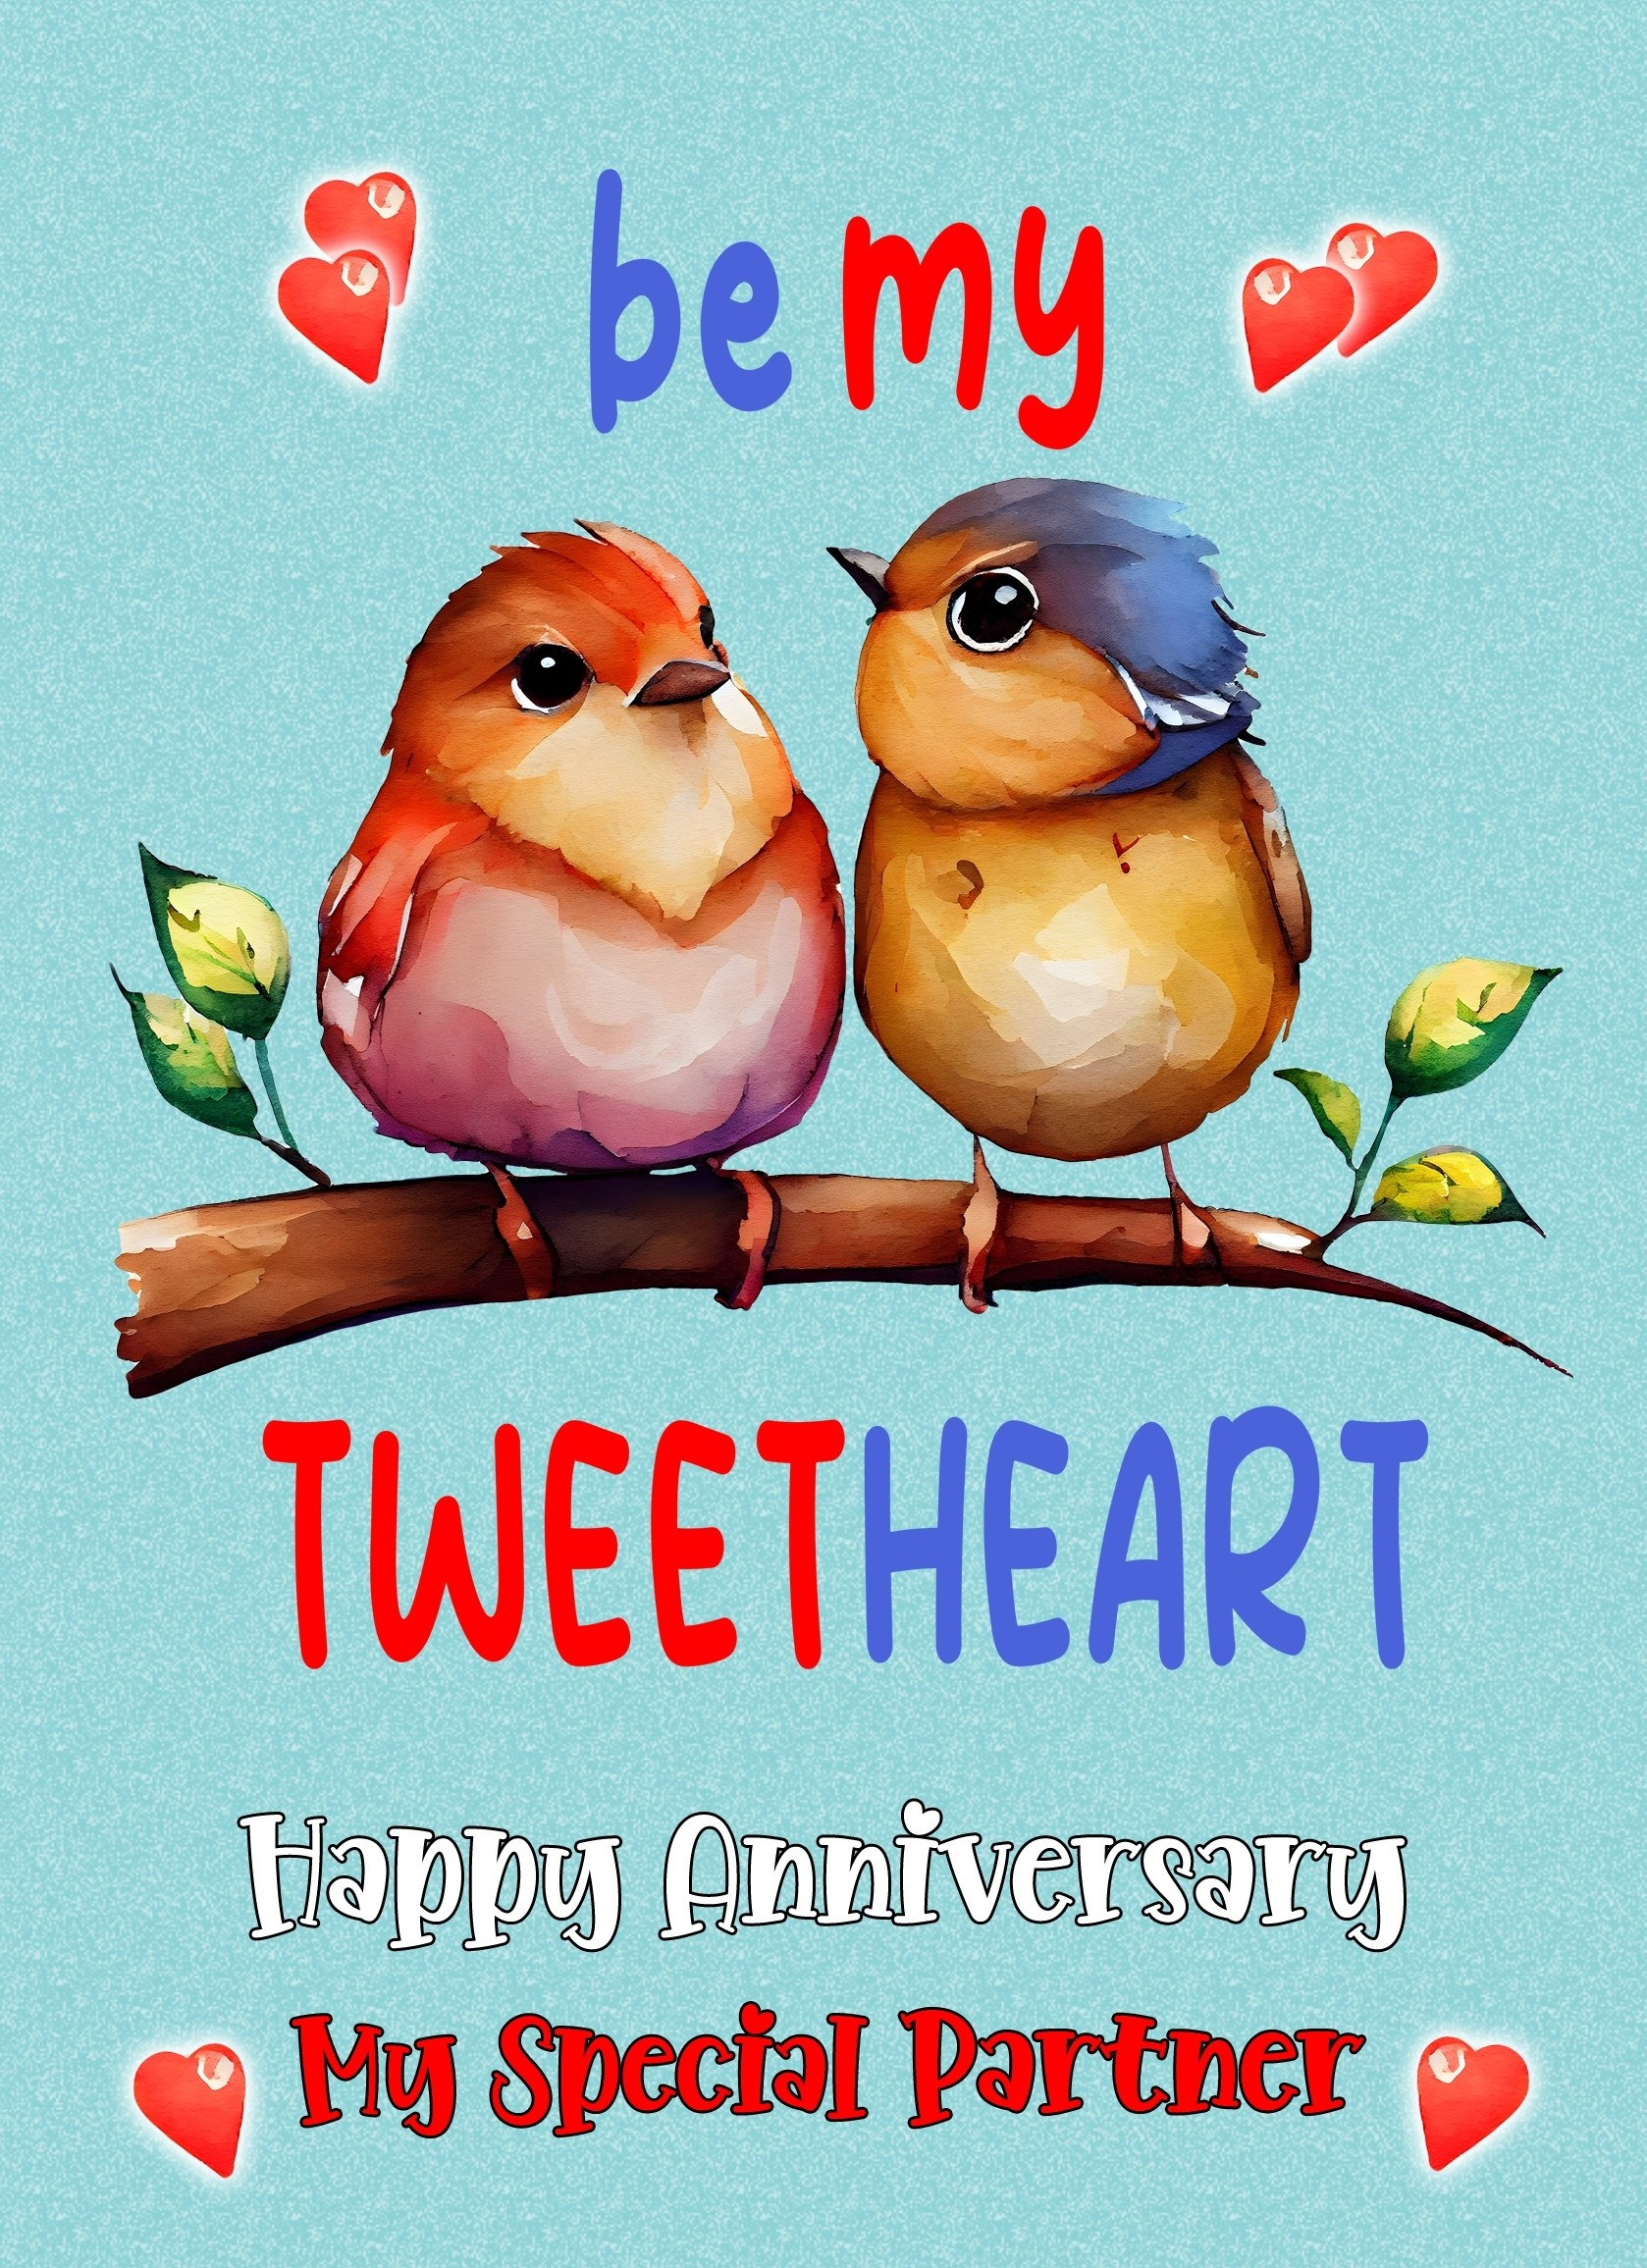 Funny Pun Romantic Anniversary Card for Partner (Tweetheart)